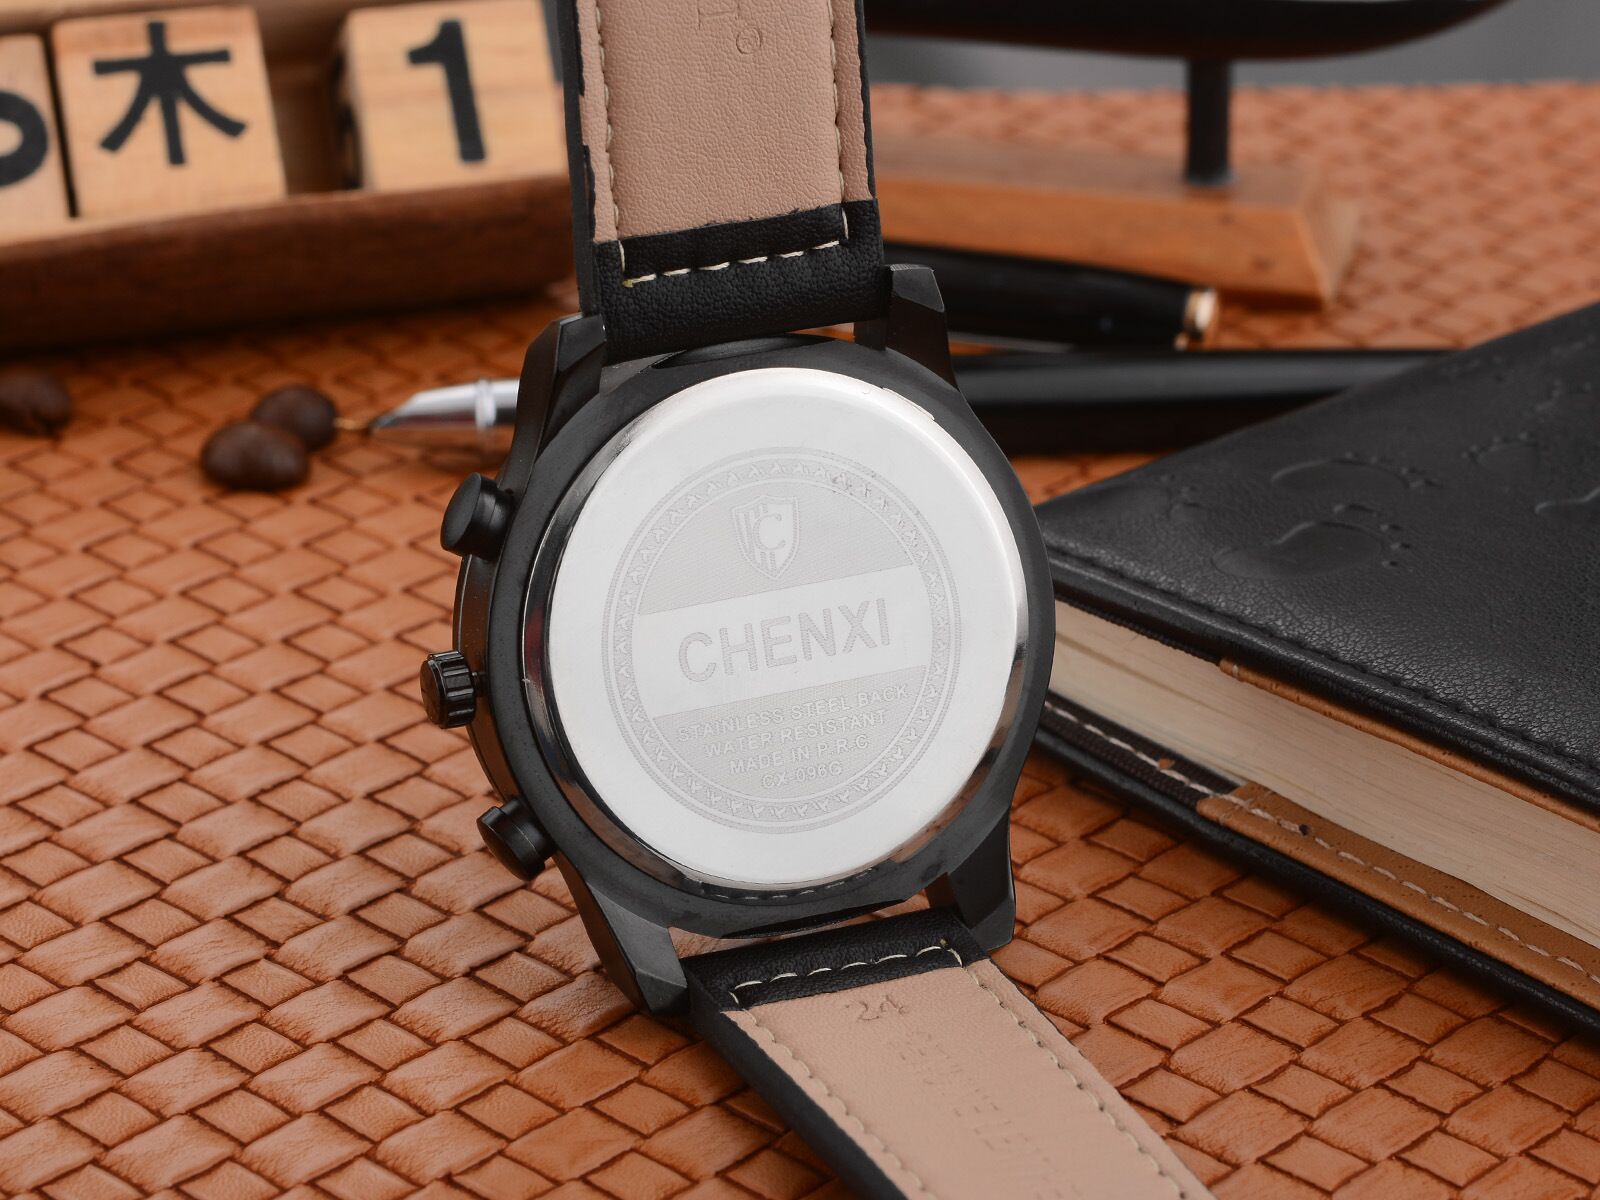 096B CHENXI Quartz Movement Leather Band Watch